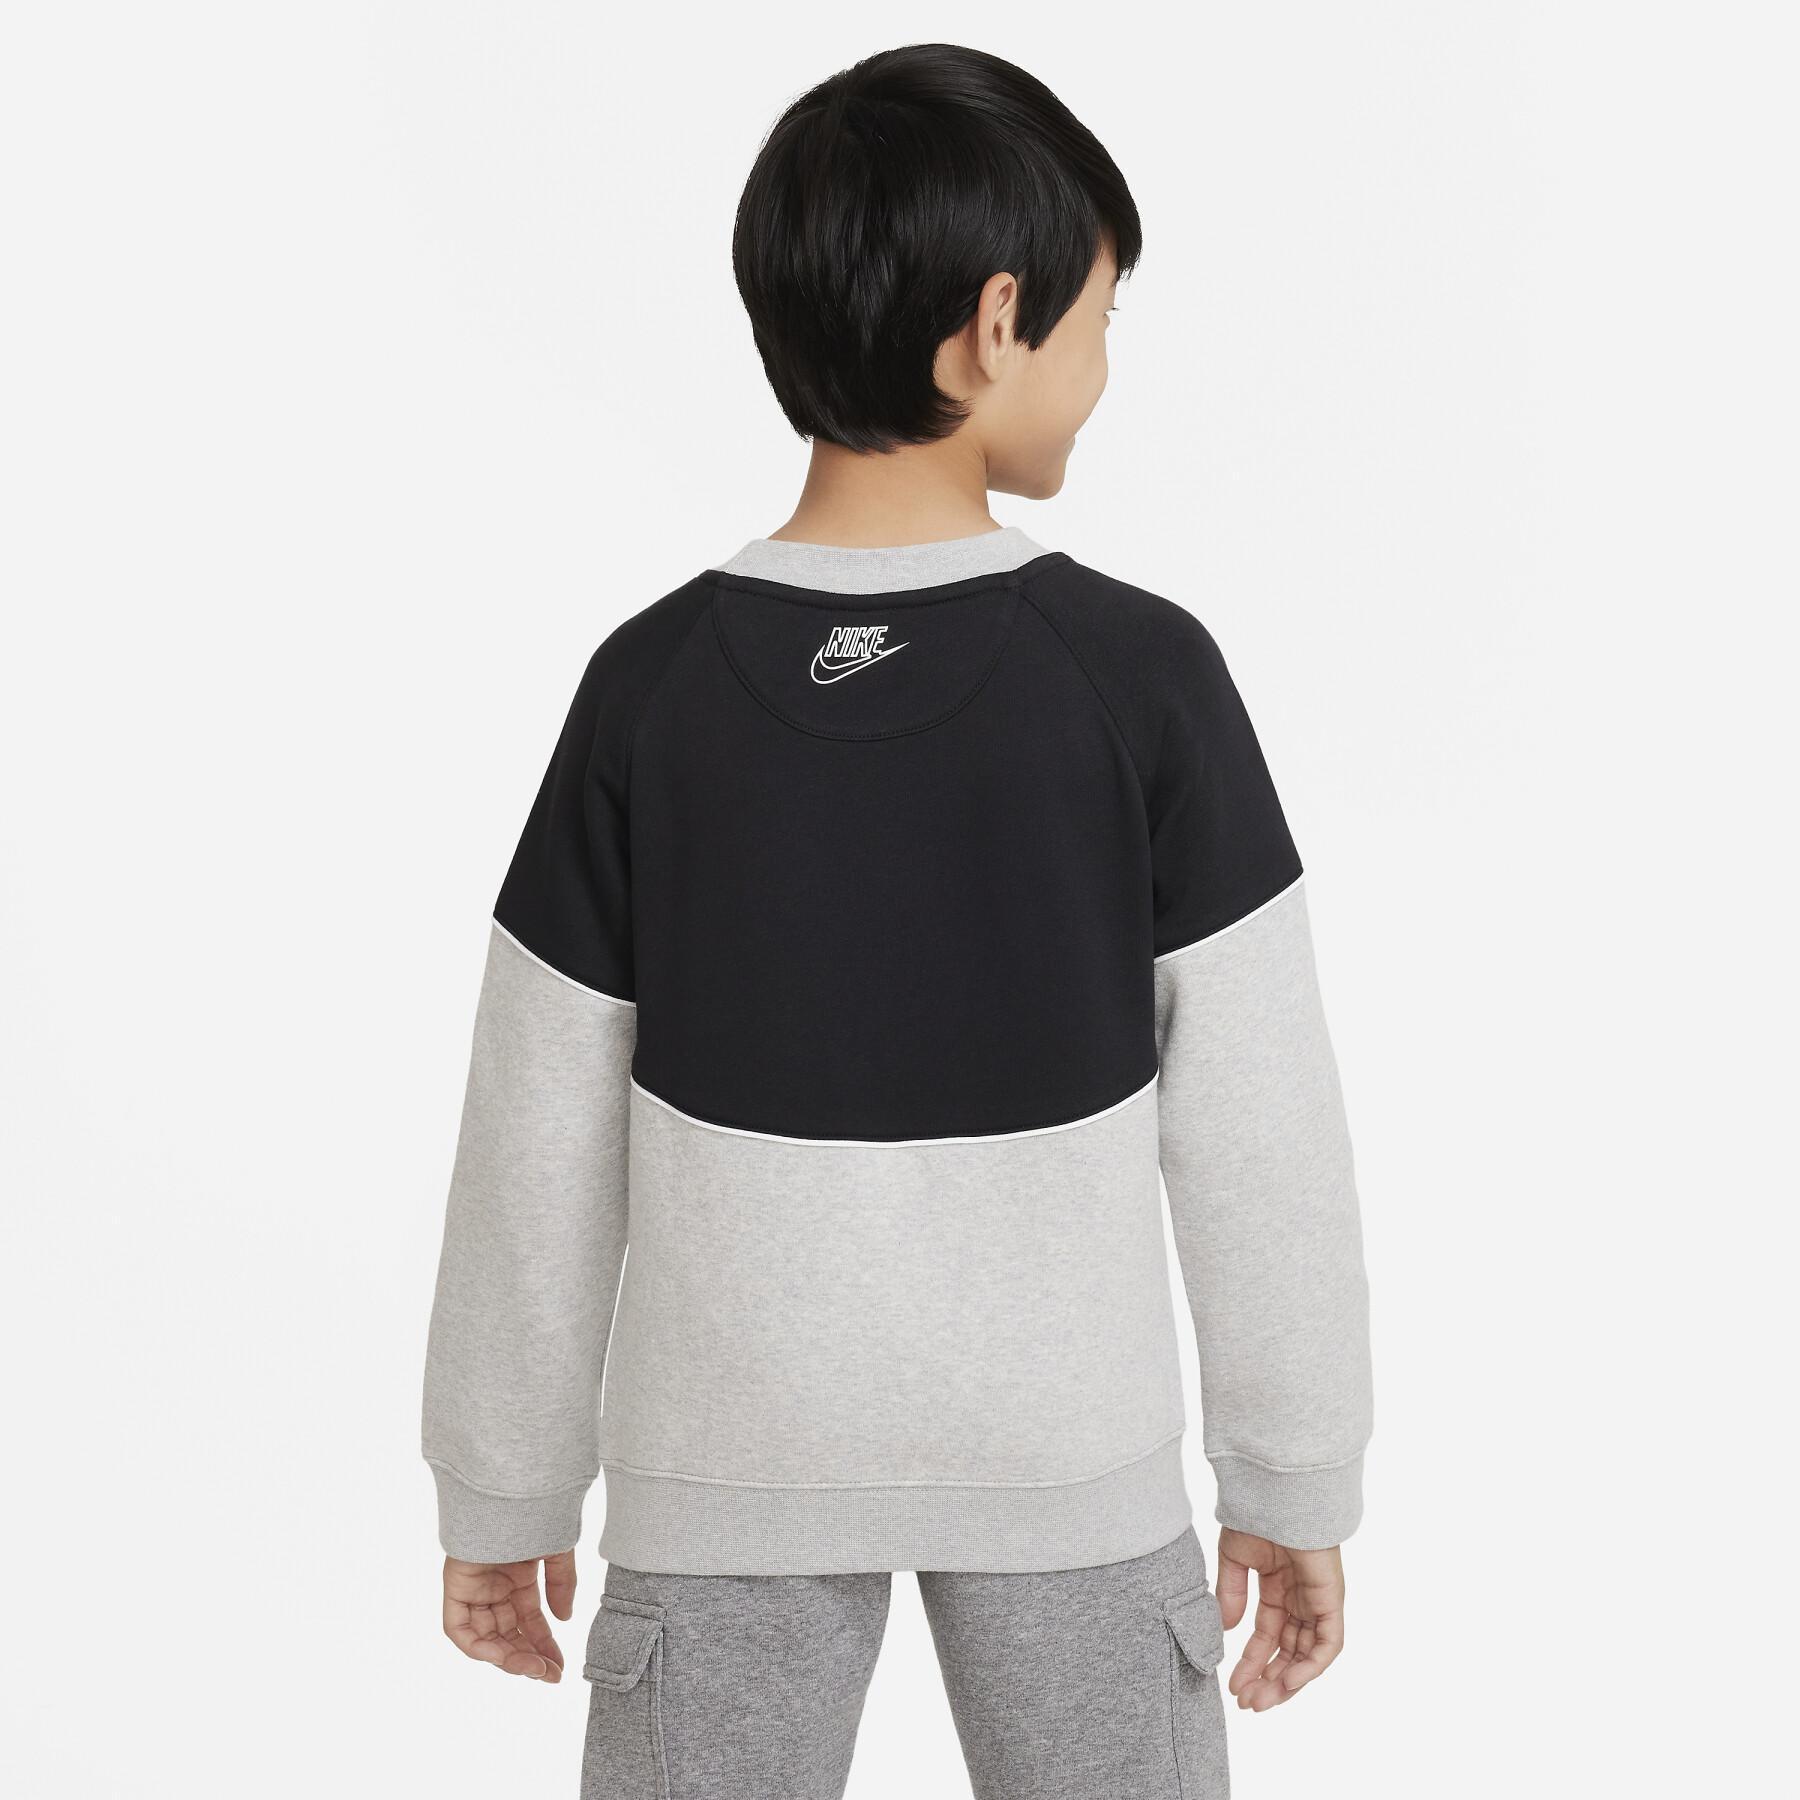 Sweatshirt niño cuello redondo Nike Amplify Fleece